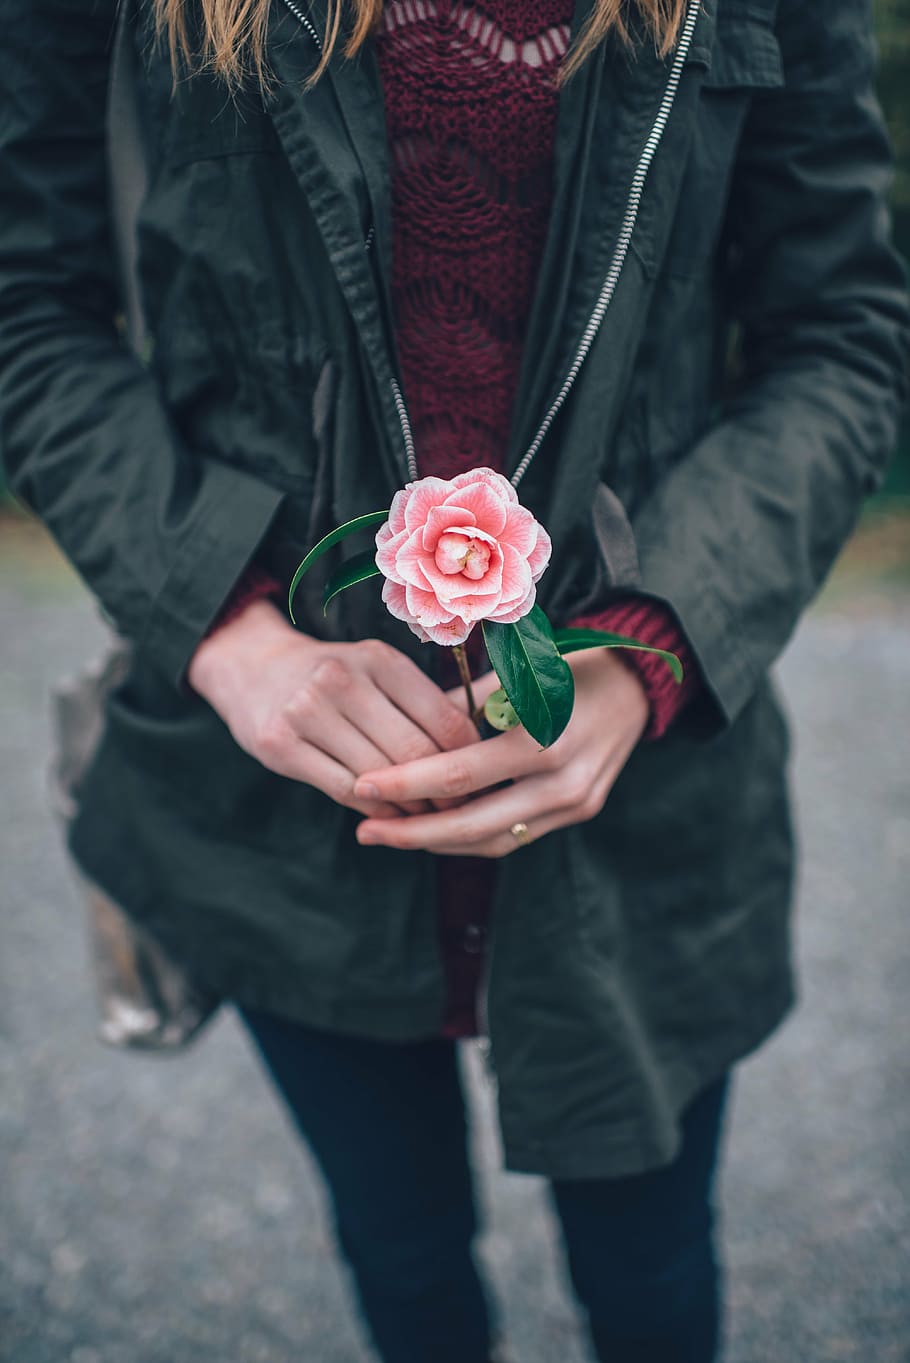 photography, woman, black, jacket, holding, pink, flower, rose, holding flower, hands